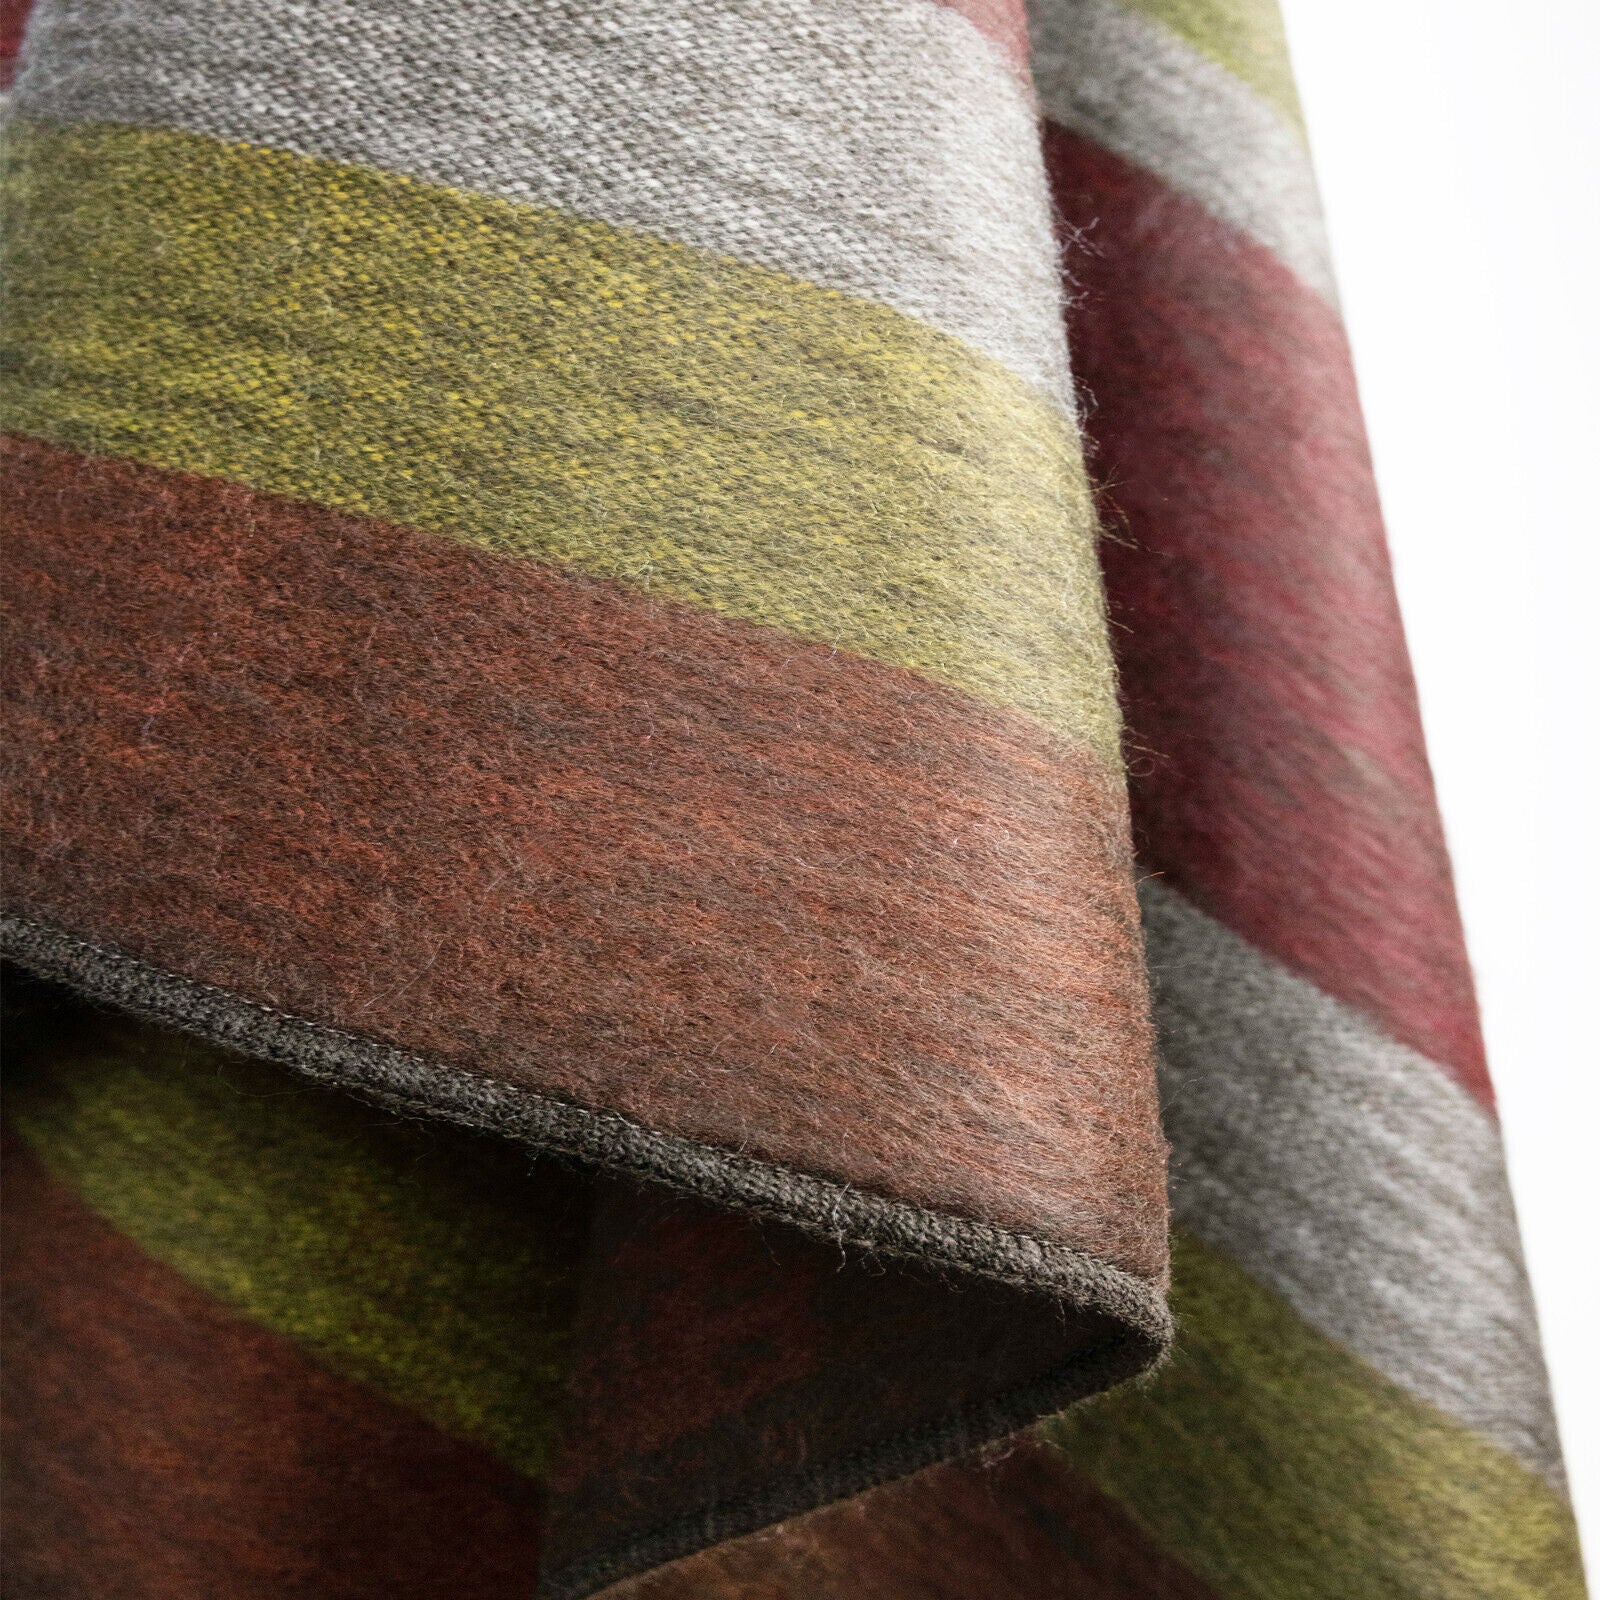 Consaguana - Baby Alpaca Wool Throw Blanket / Sofa Cover - Queen 95 x 67 in - brown coffee colors